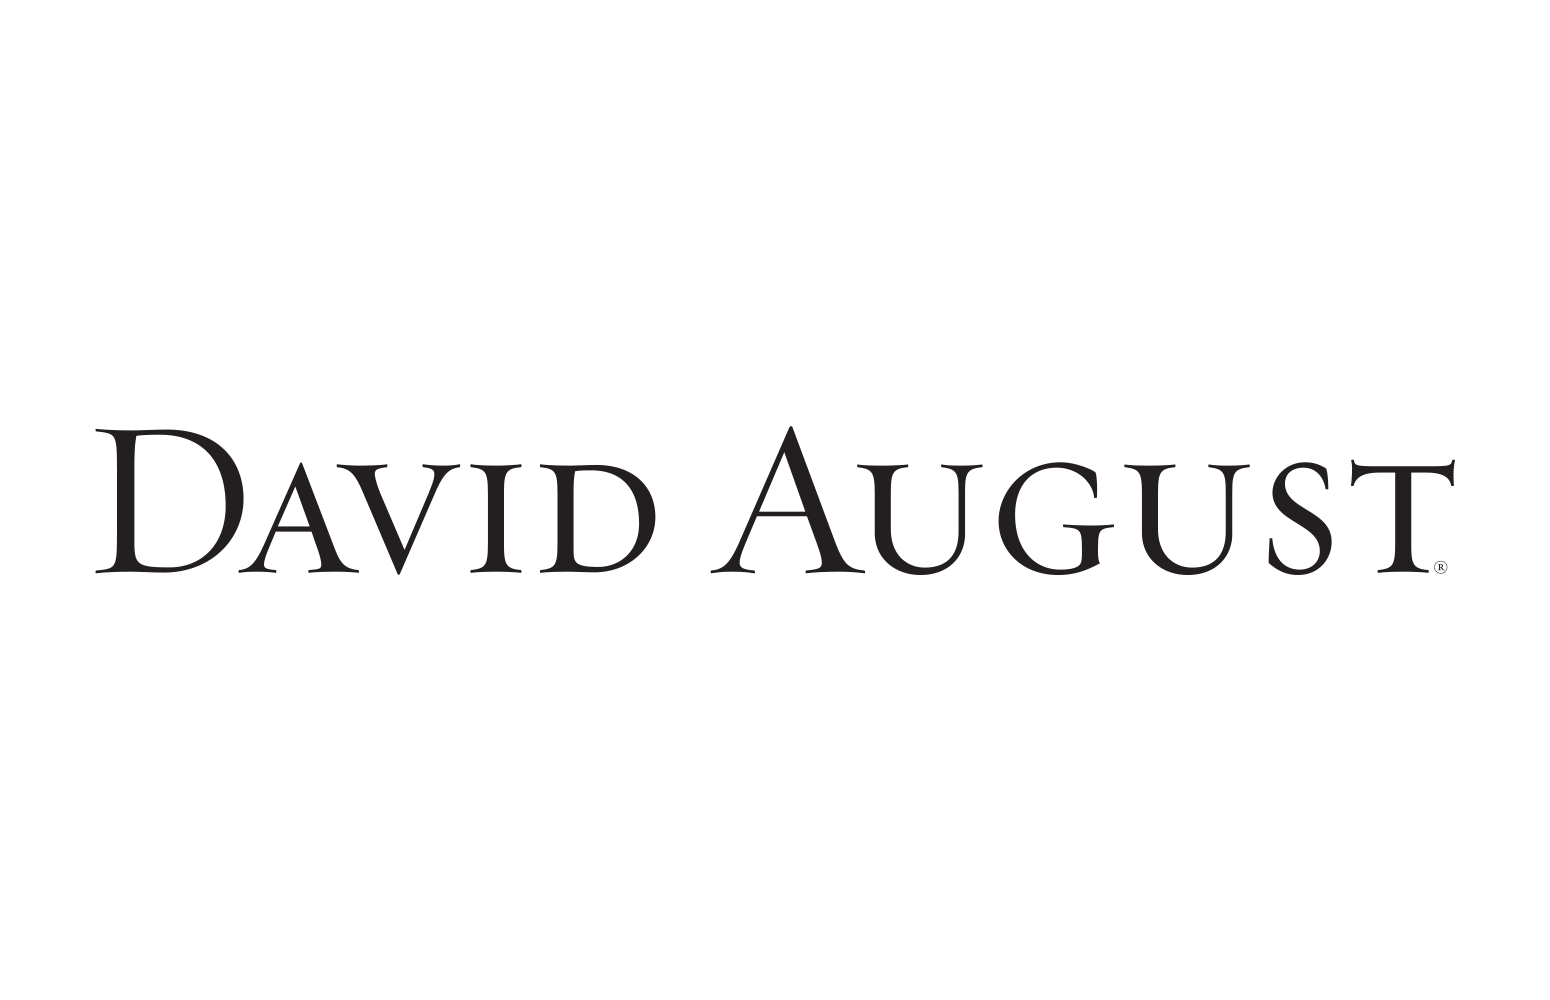 David August